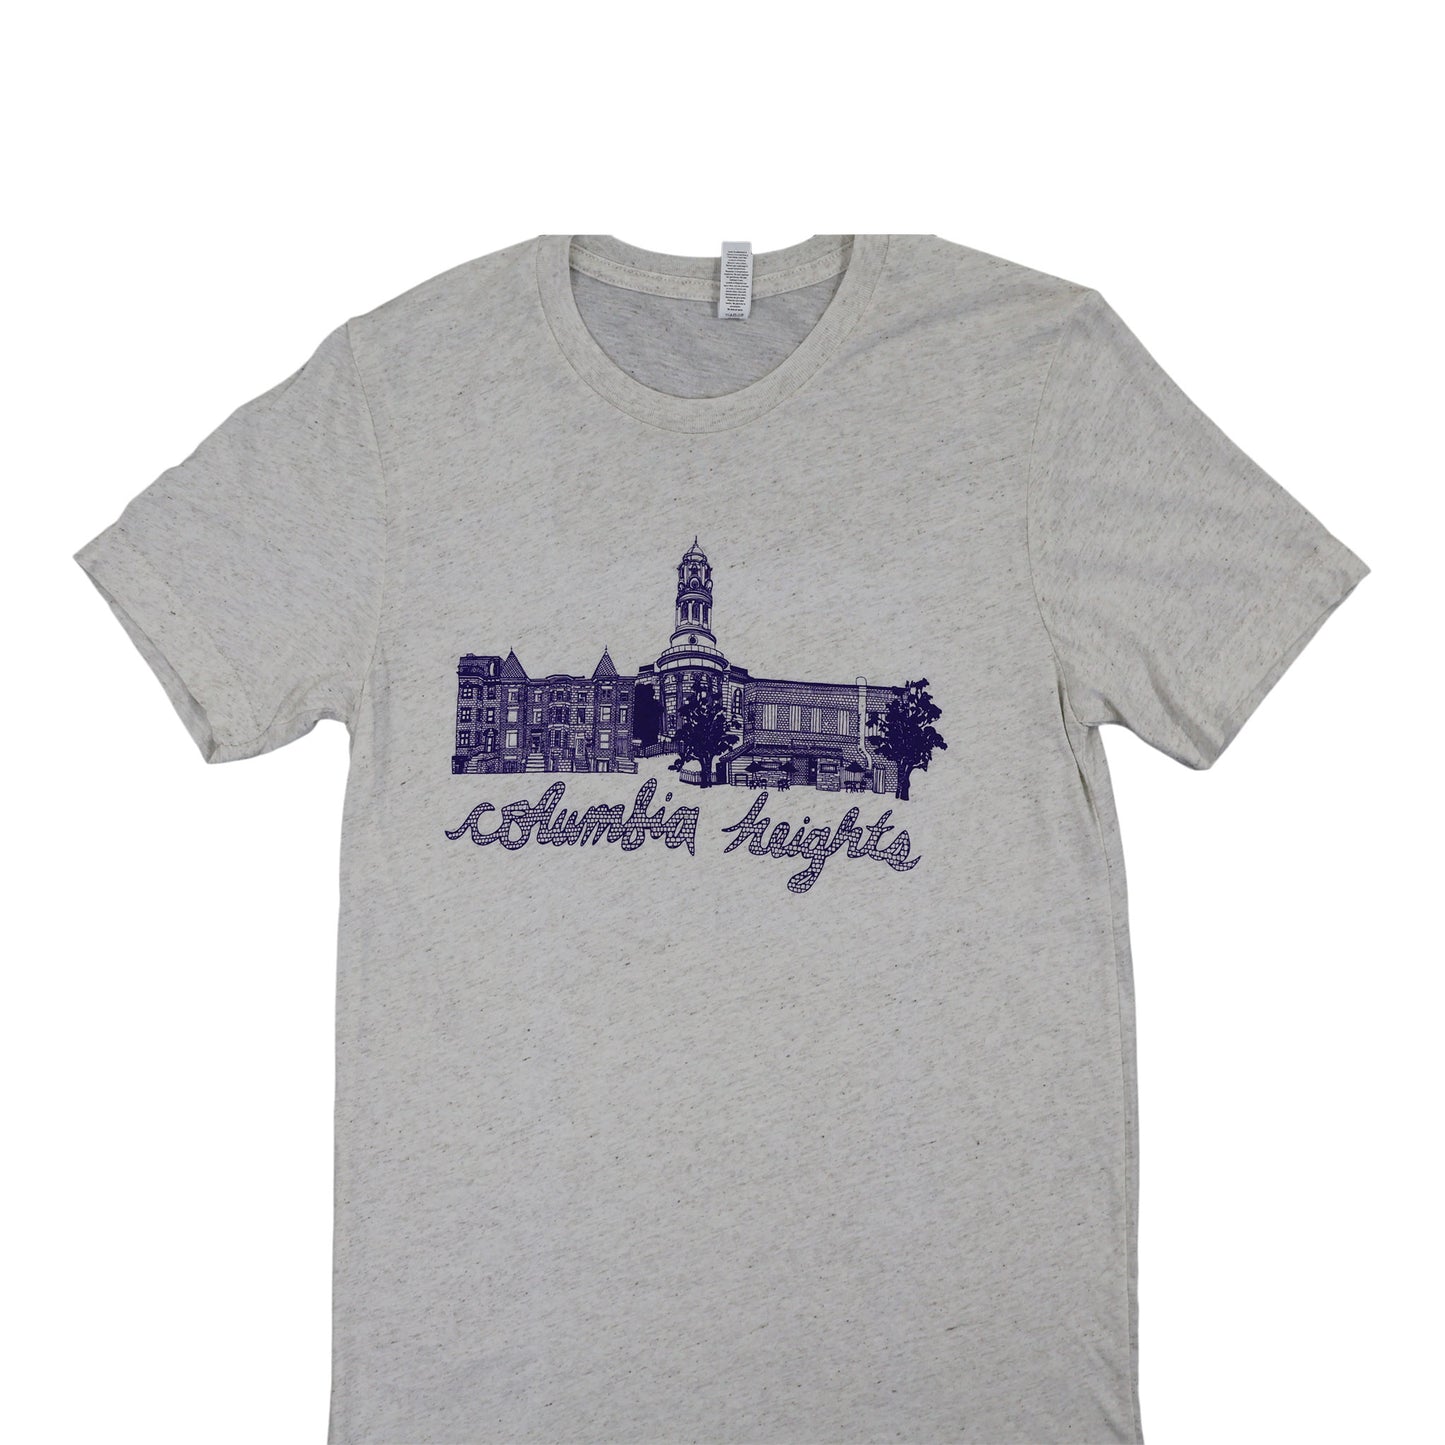 Unisex "Columbia Heights" Oatmeal Triblend shirt